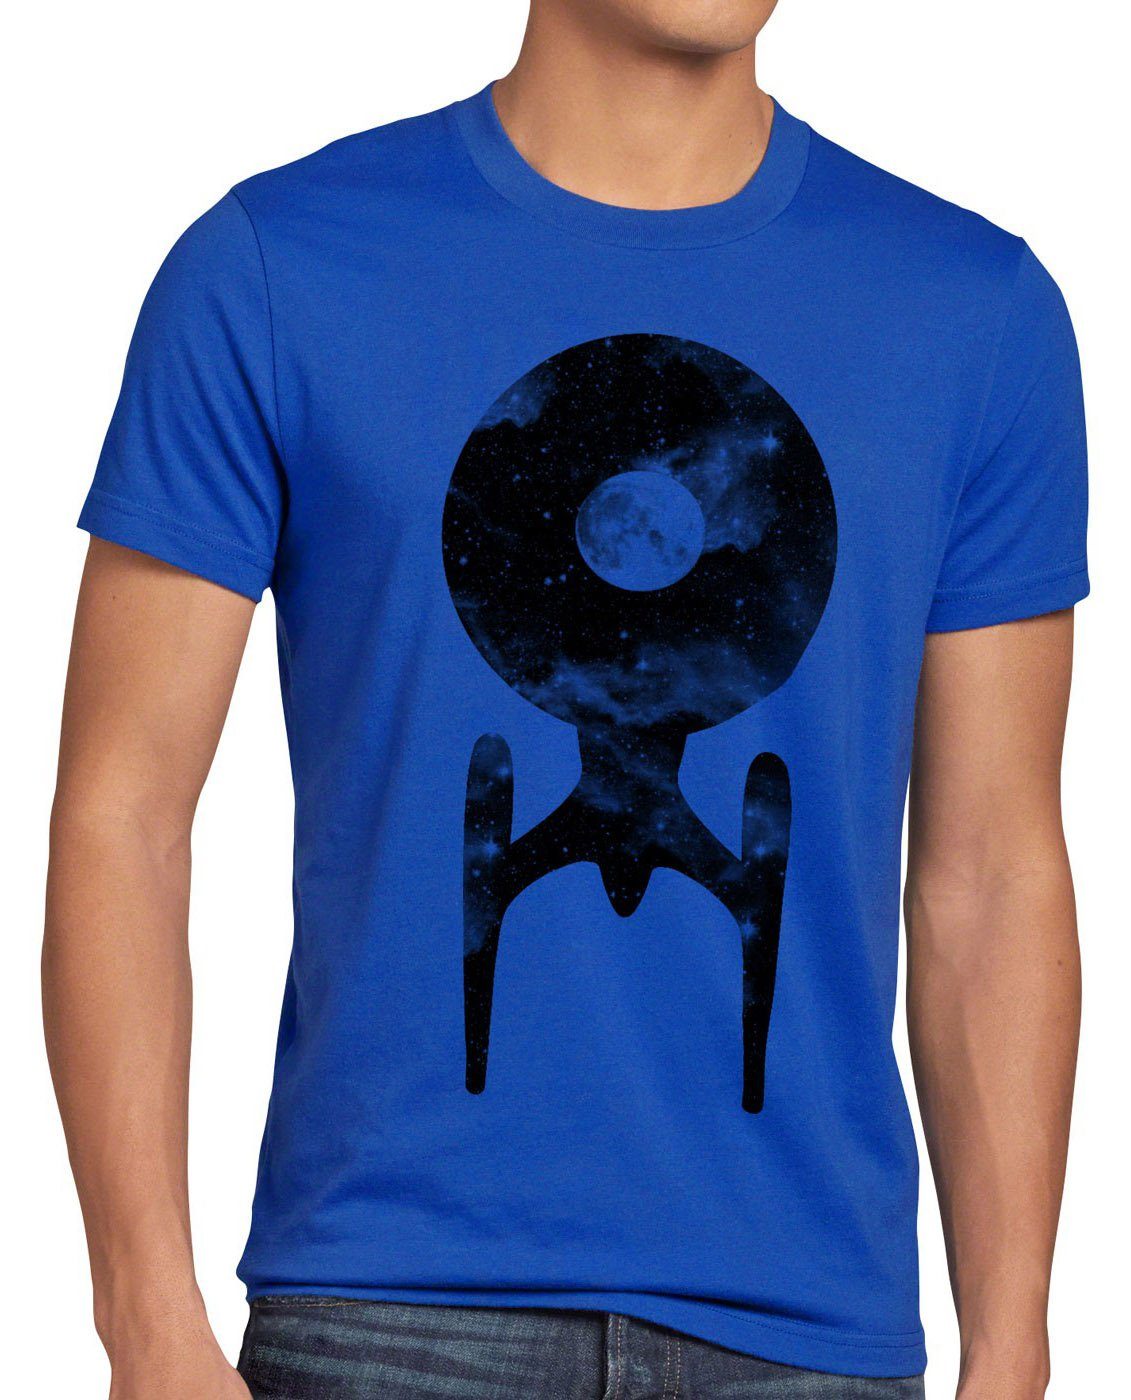 Print-Shirt ncc-1701-d uss trekkie T-Shirt blau Herren star Trek trekkie enterprise Raumschiff style3